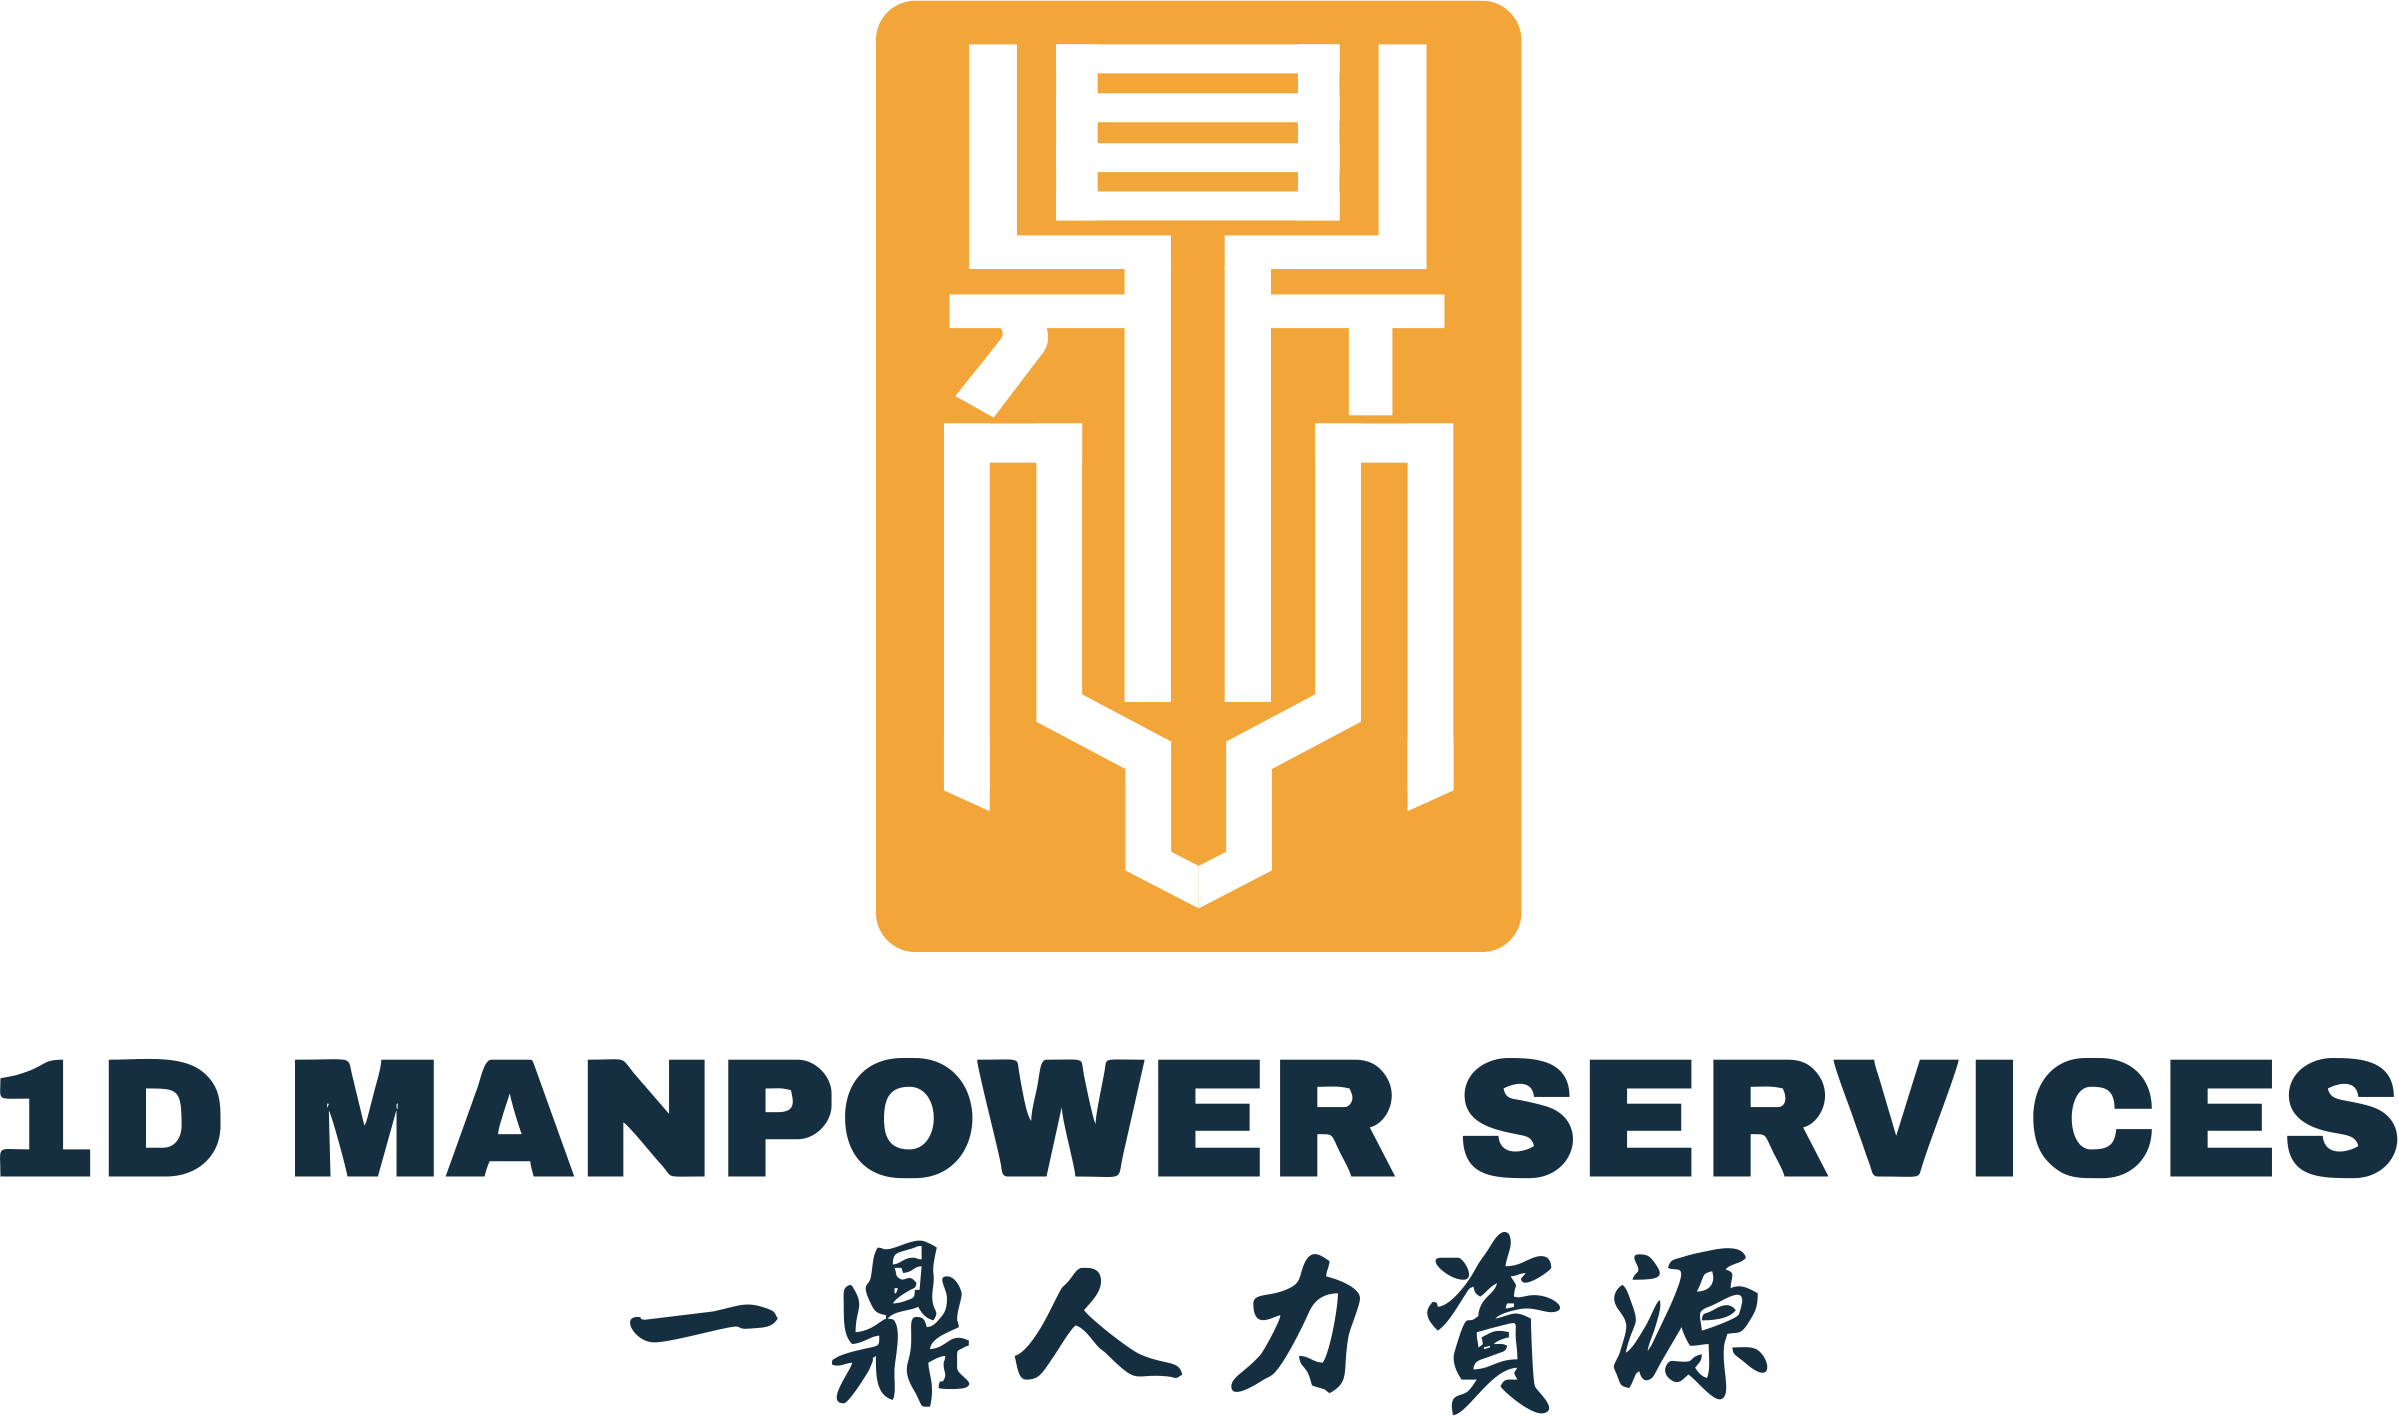 1D Manpower Services Inc.